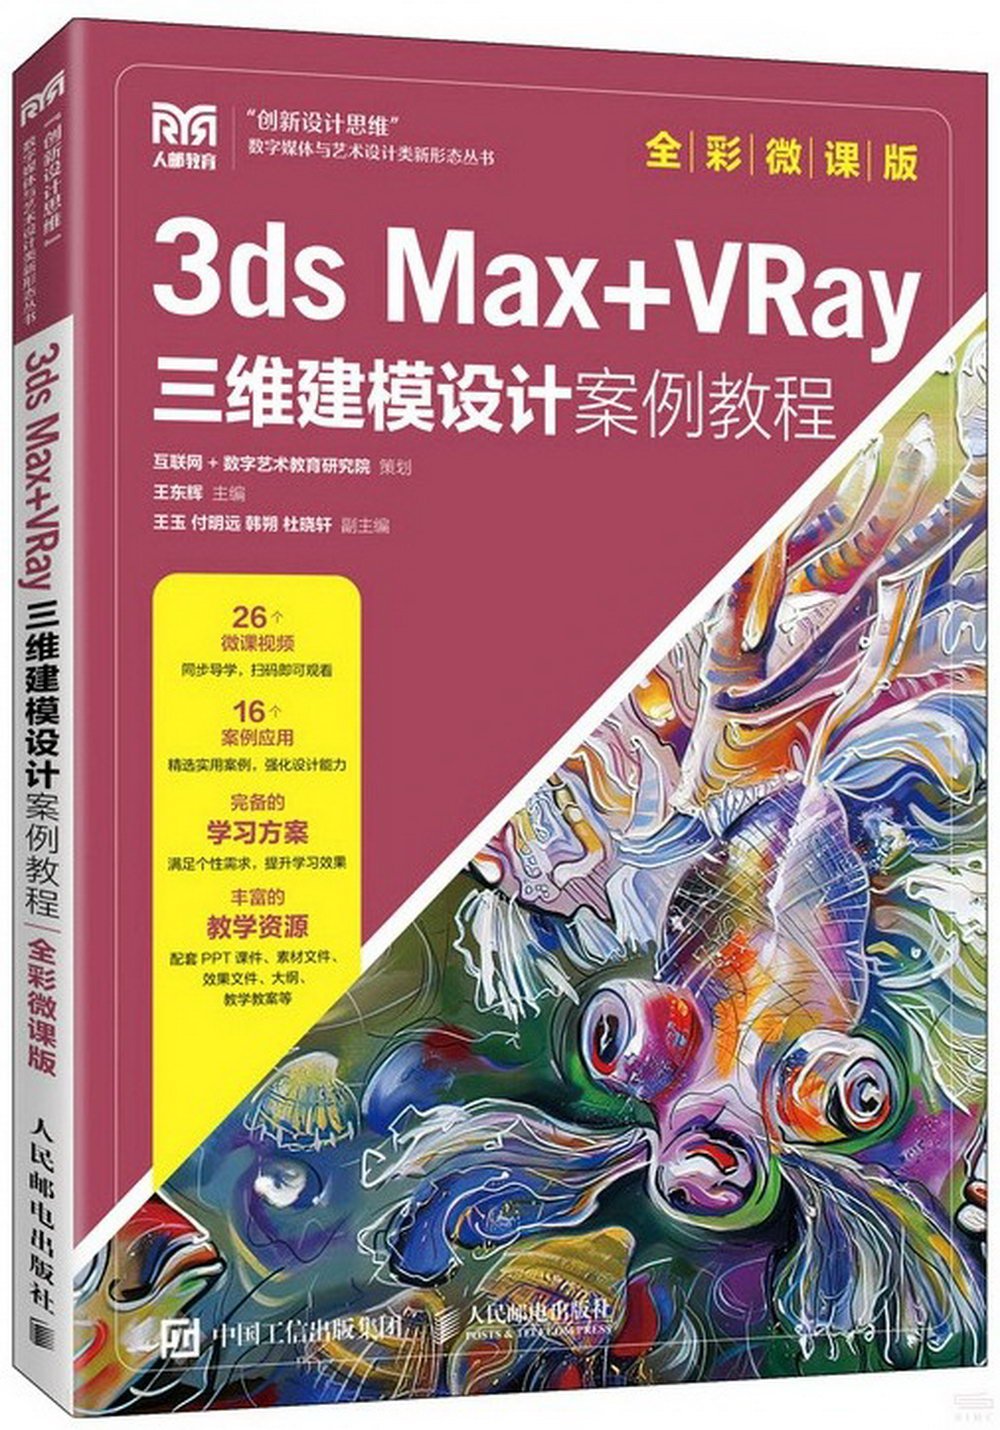 3ds Max+VRay三維建模設計案例教程（全彩微課版）